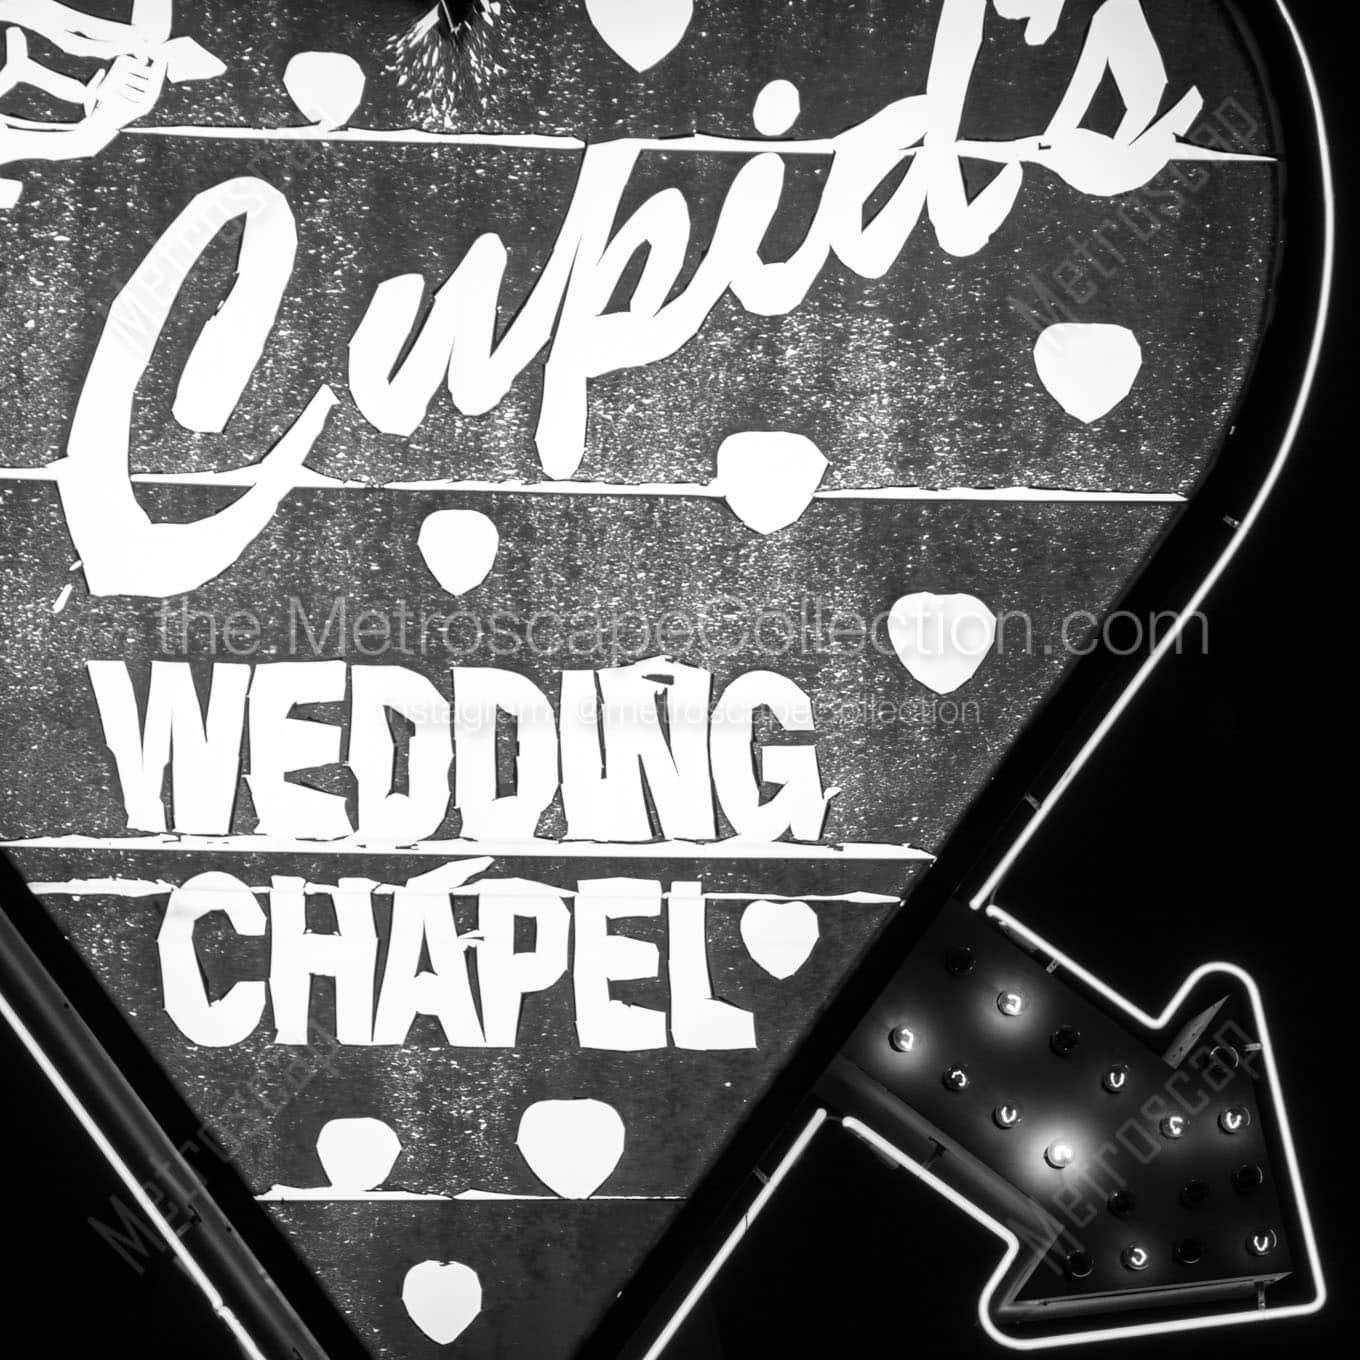 cupids wedding chapel Black & White Wall Art